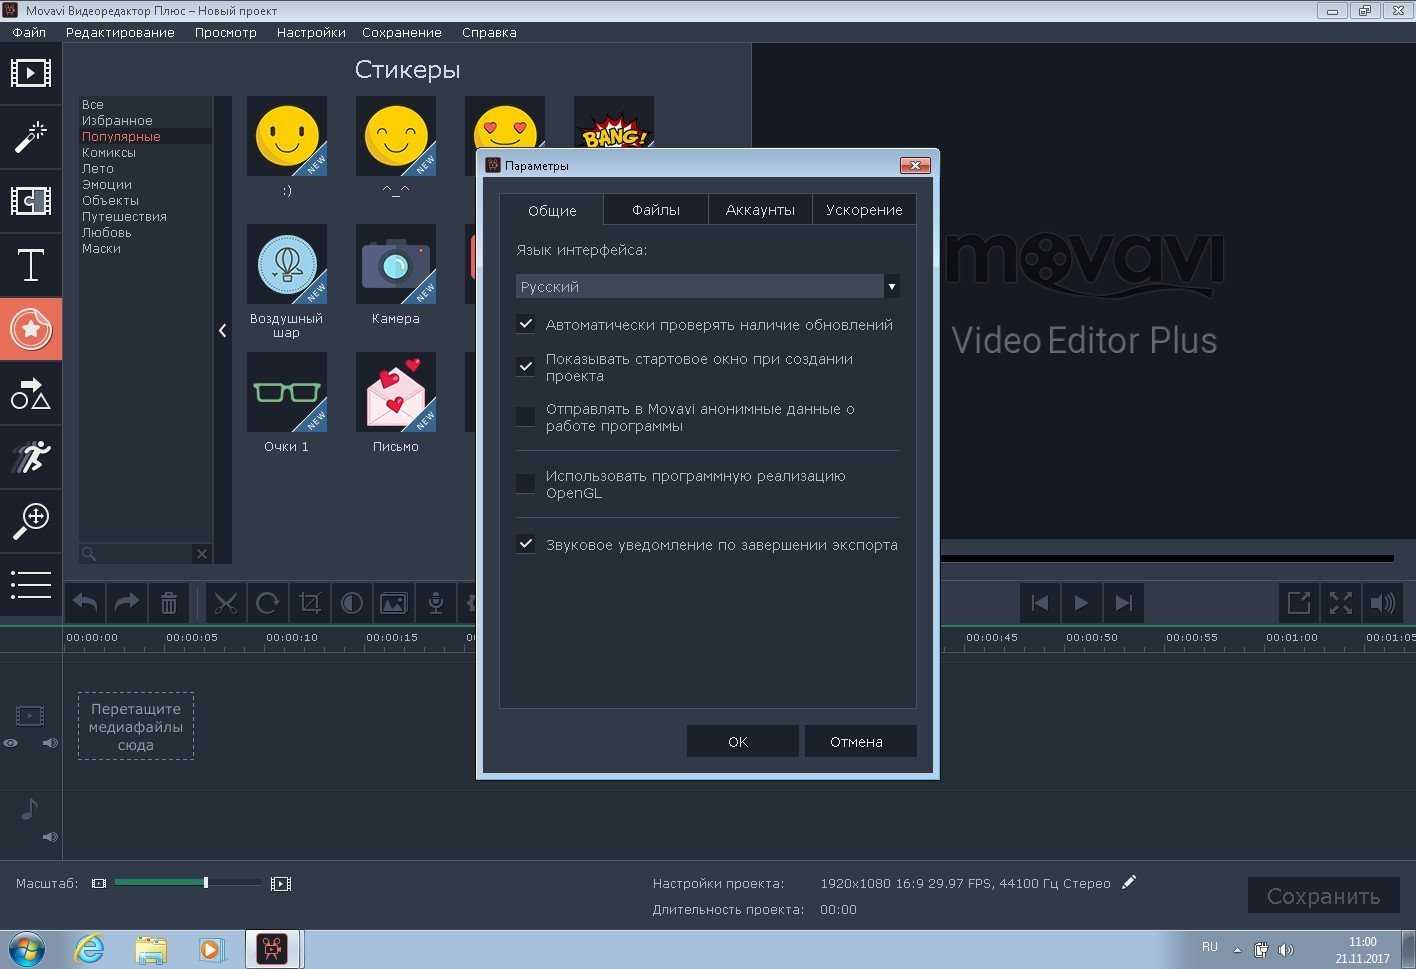 Наложение картинки или фото на видео в редакторе movavi video suite (editor)